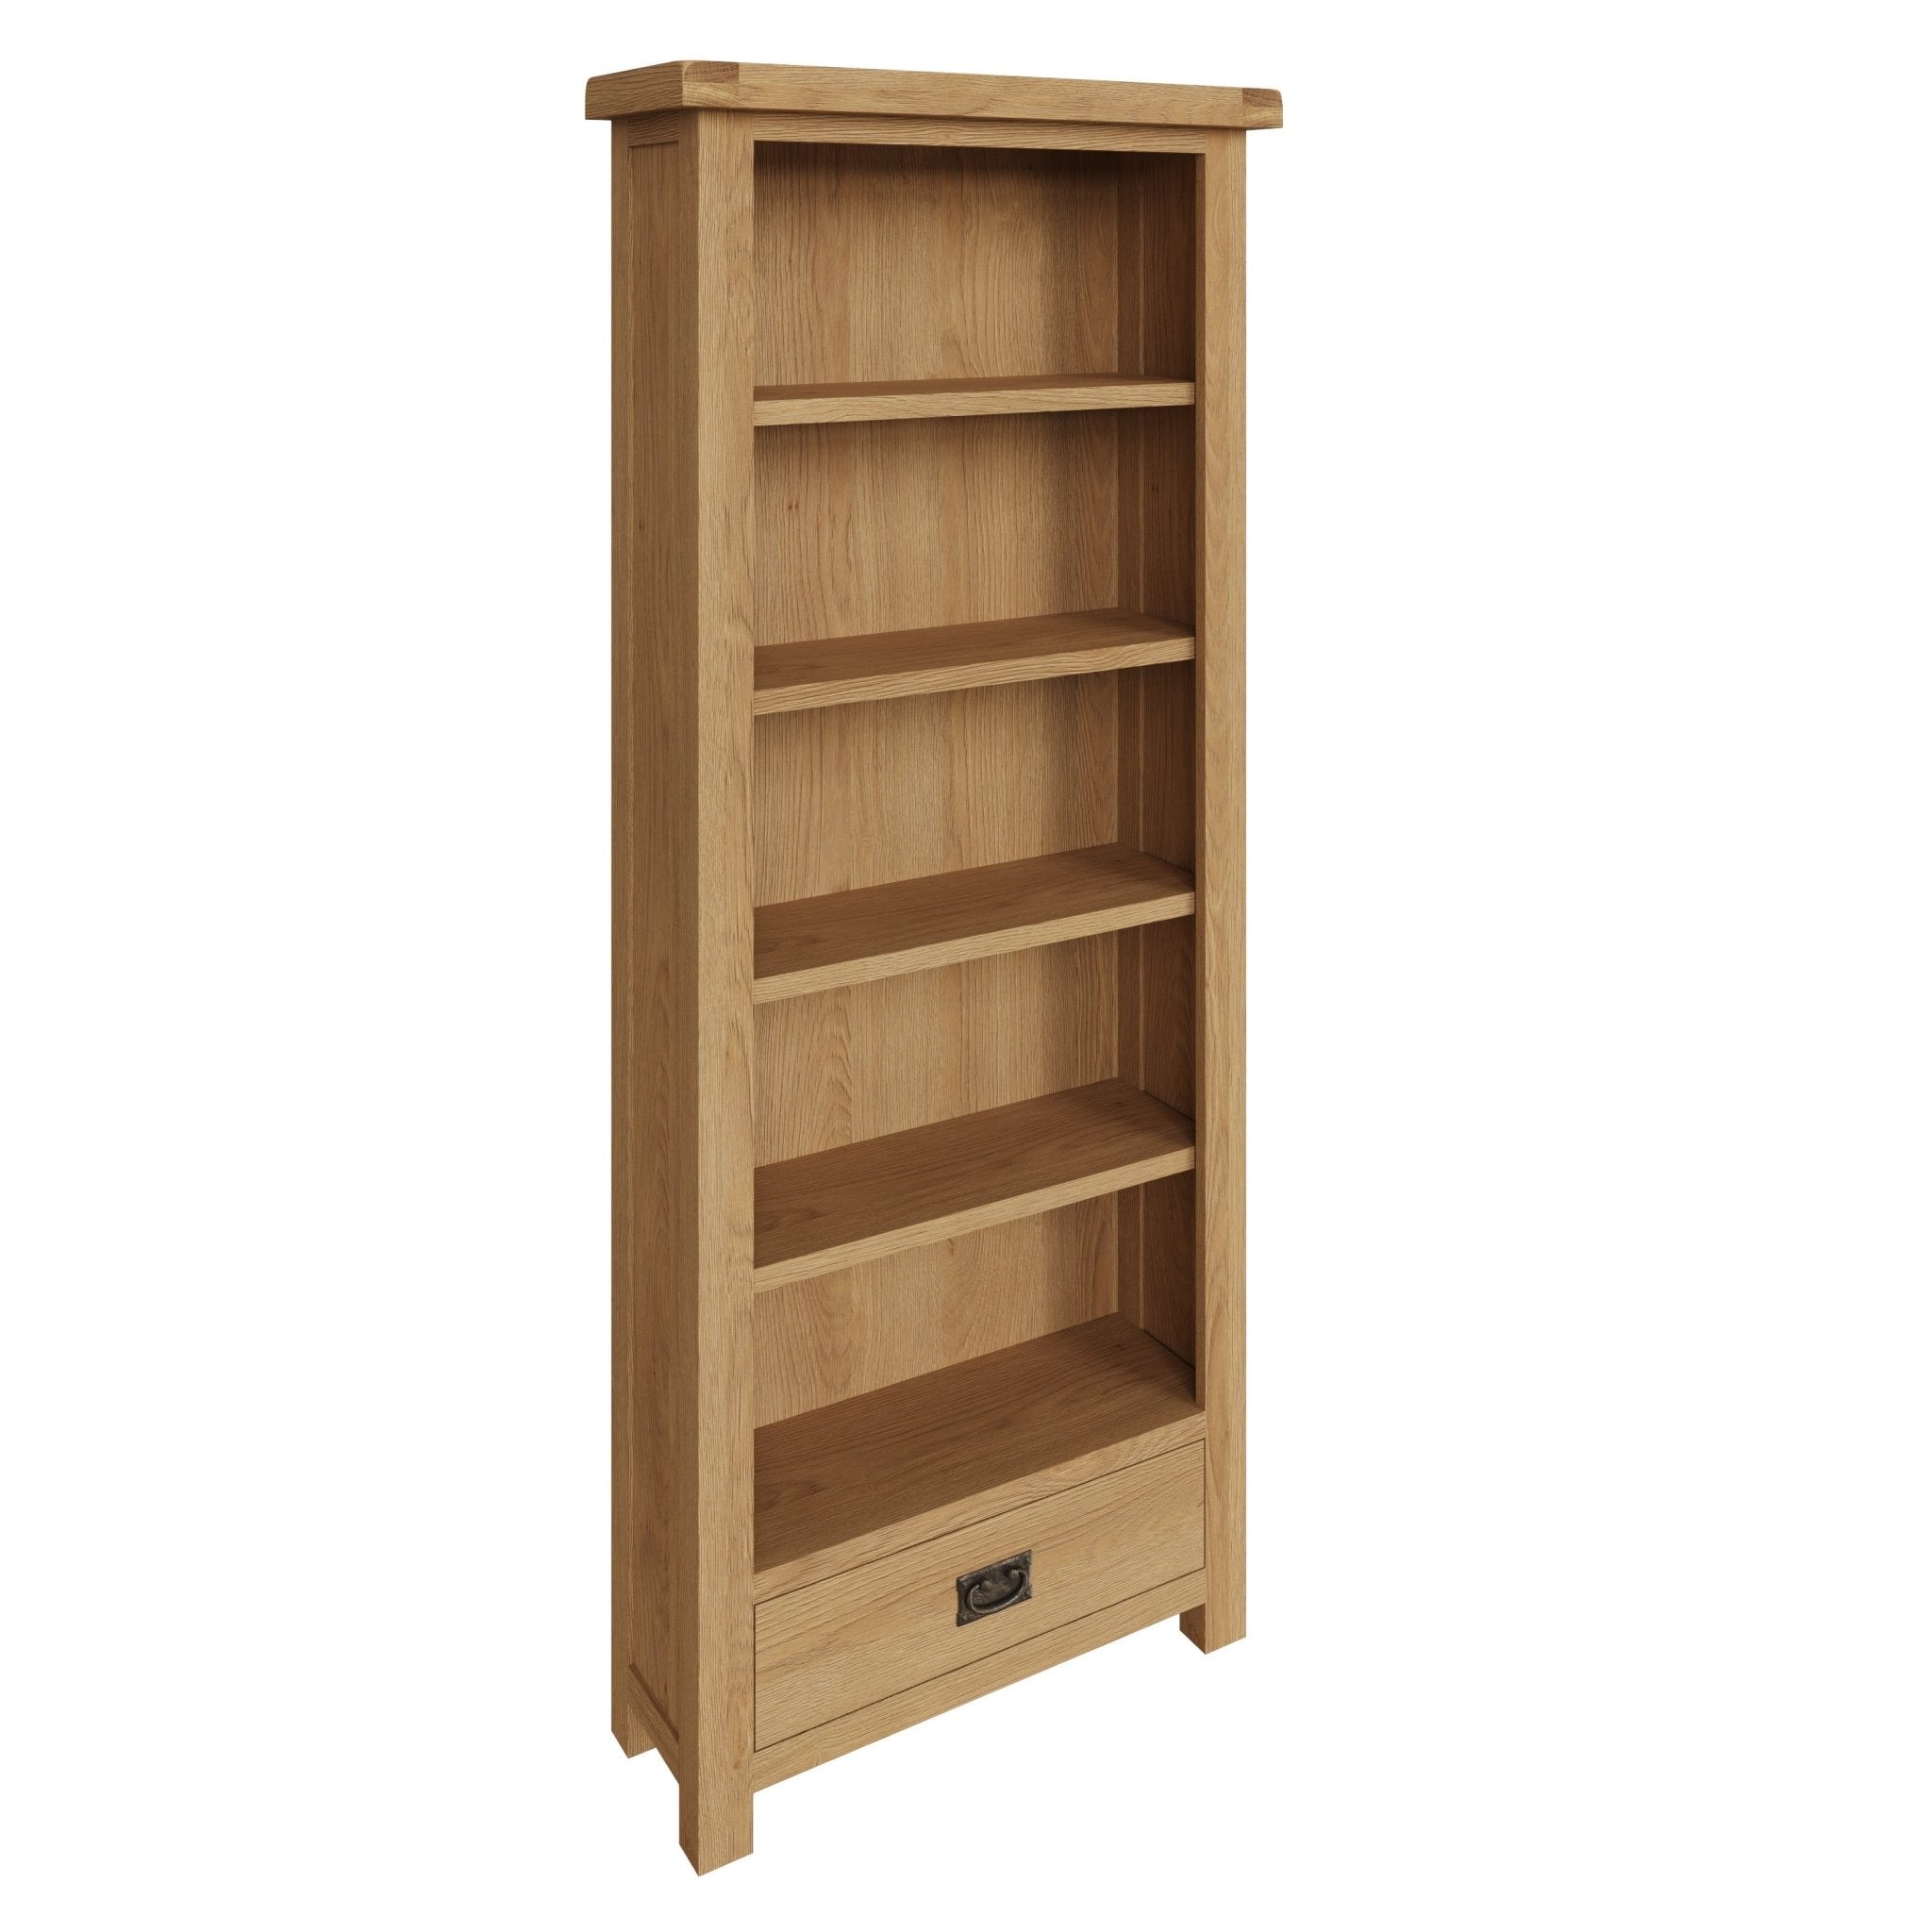 Kirdford Oak Tall Wooden Bookcase - Duck Barn Interiors